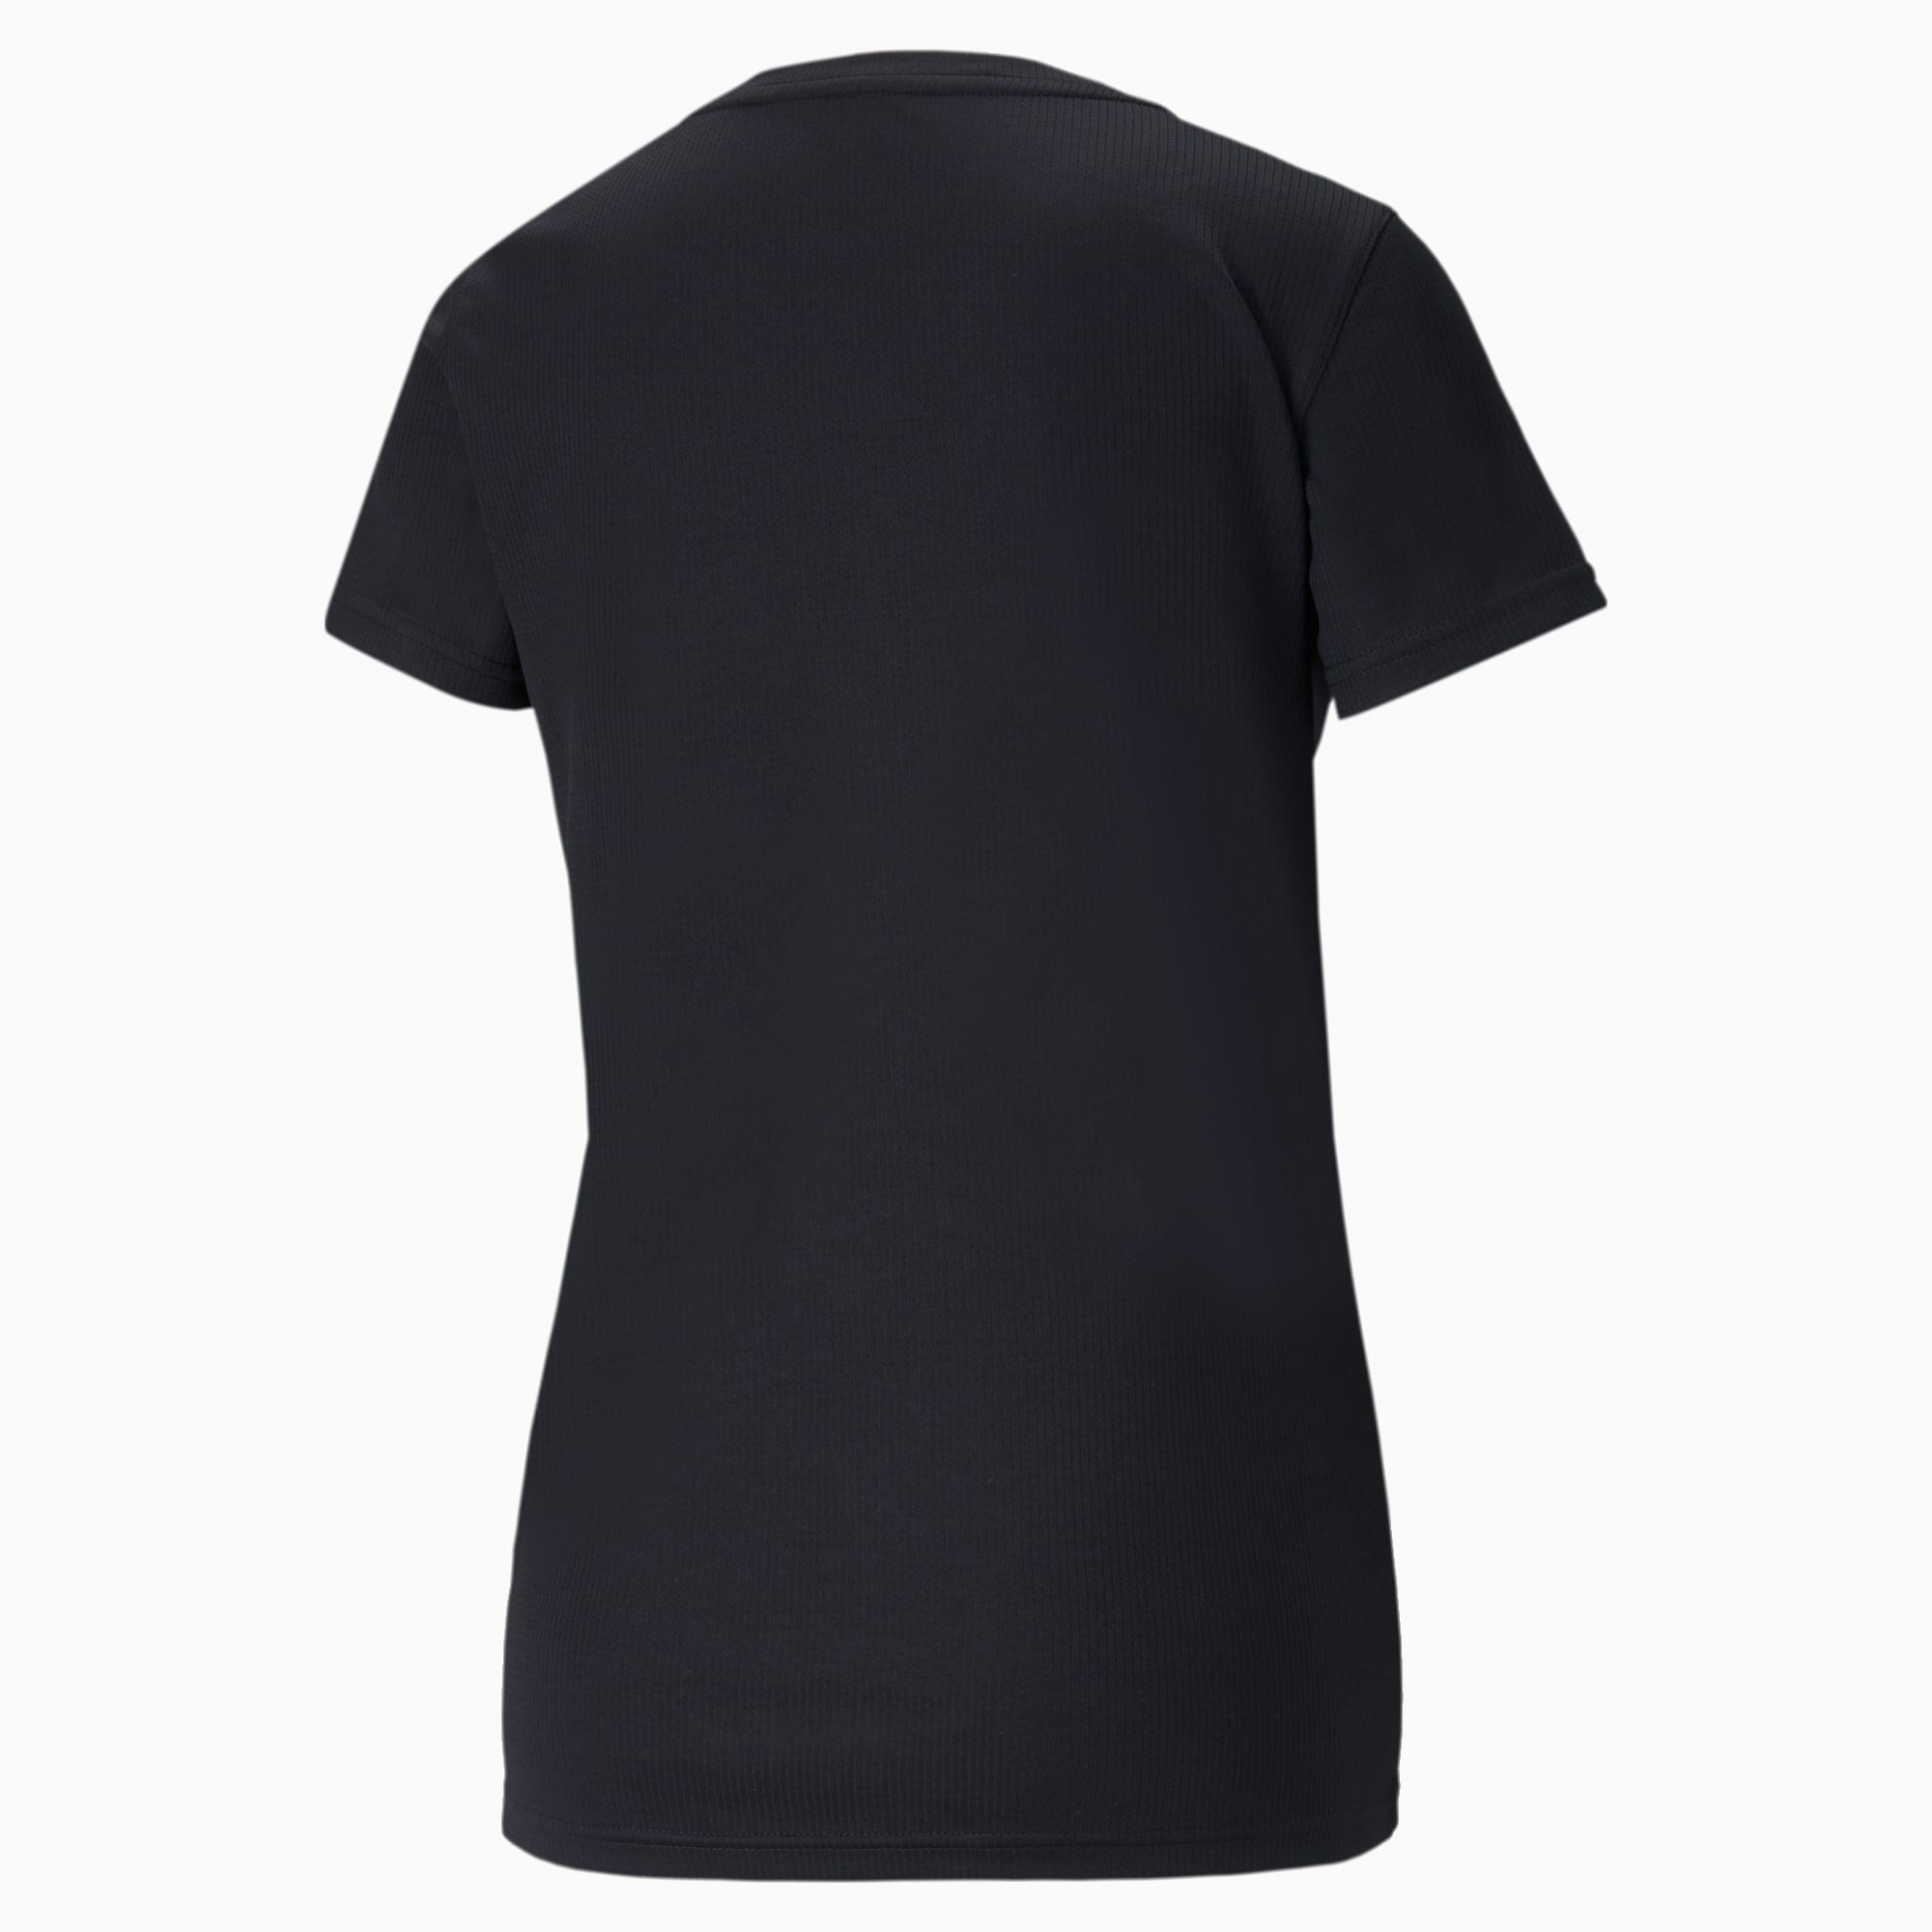 PUMA Performance Damen Trainings-T-Shirt, Schwarz, Größe: S, Kleidung